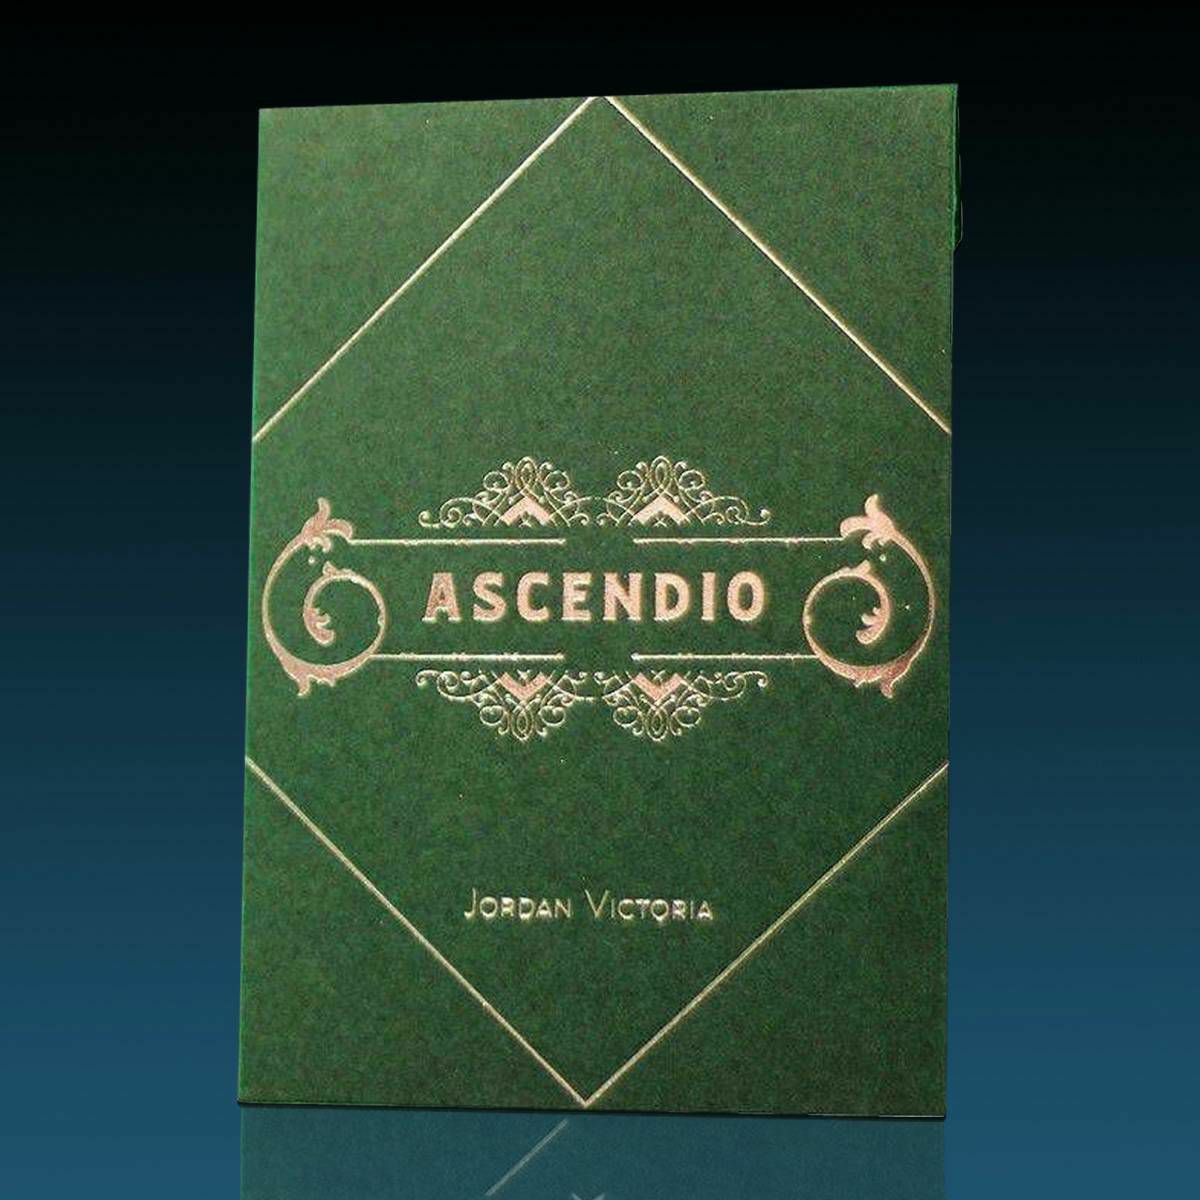 Ascendio by Jordan Victoria